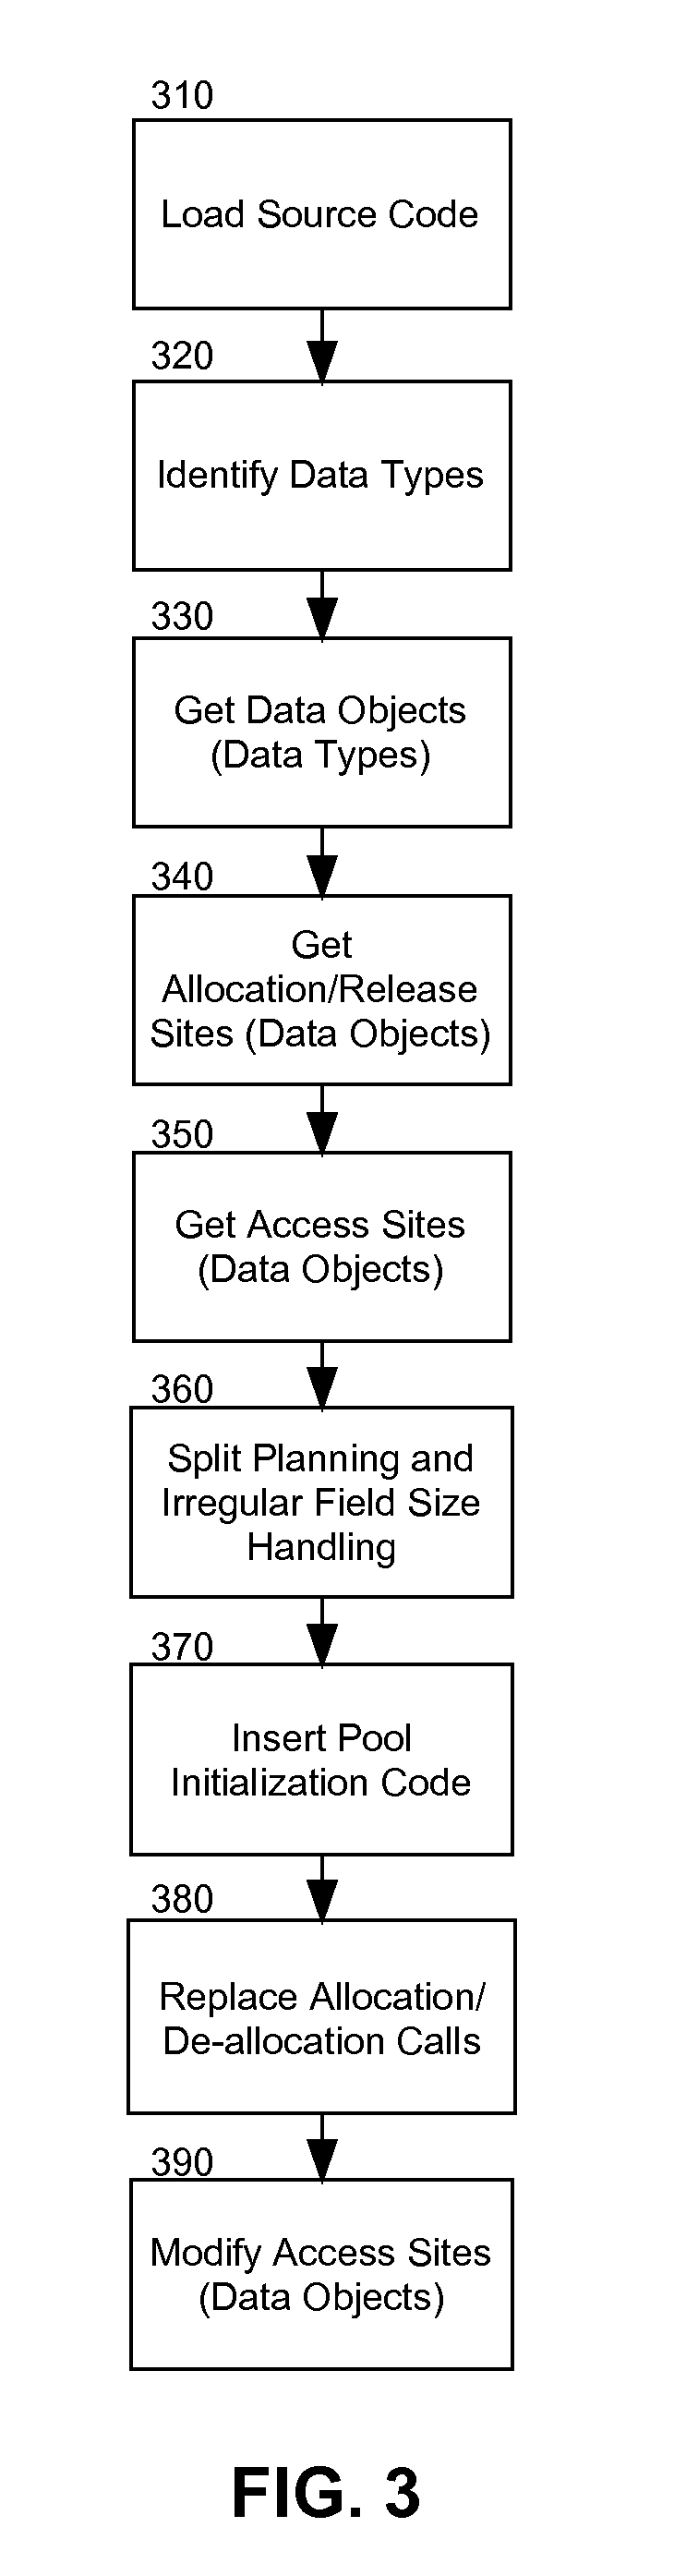 Data splitting for recursive data structures